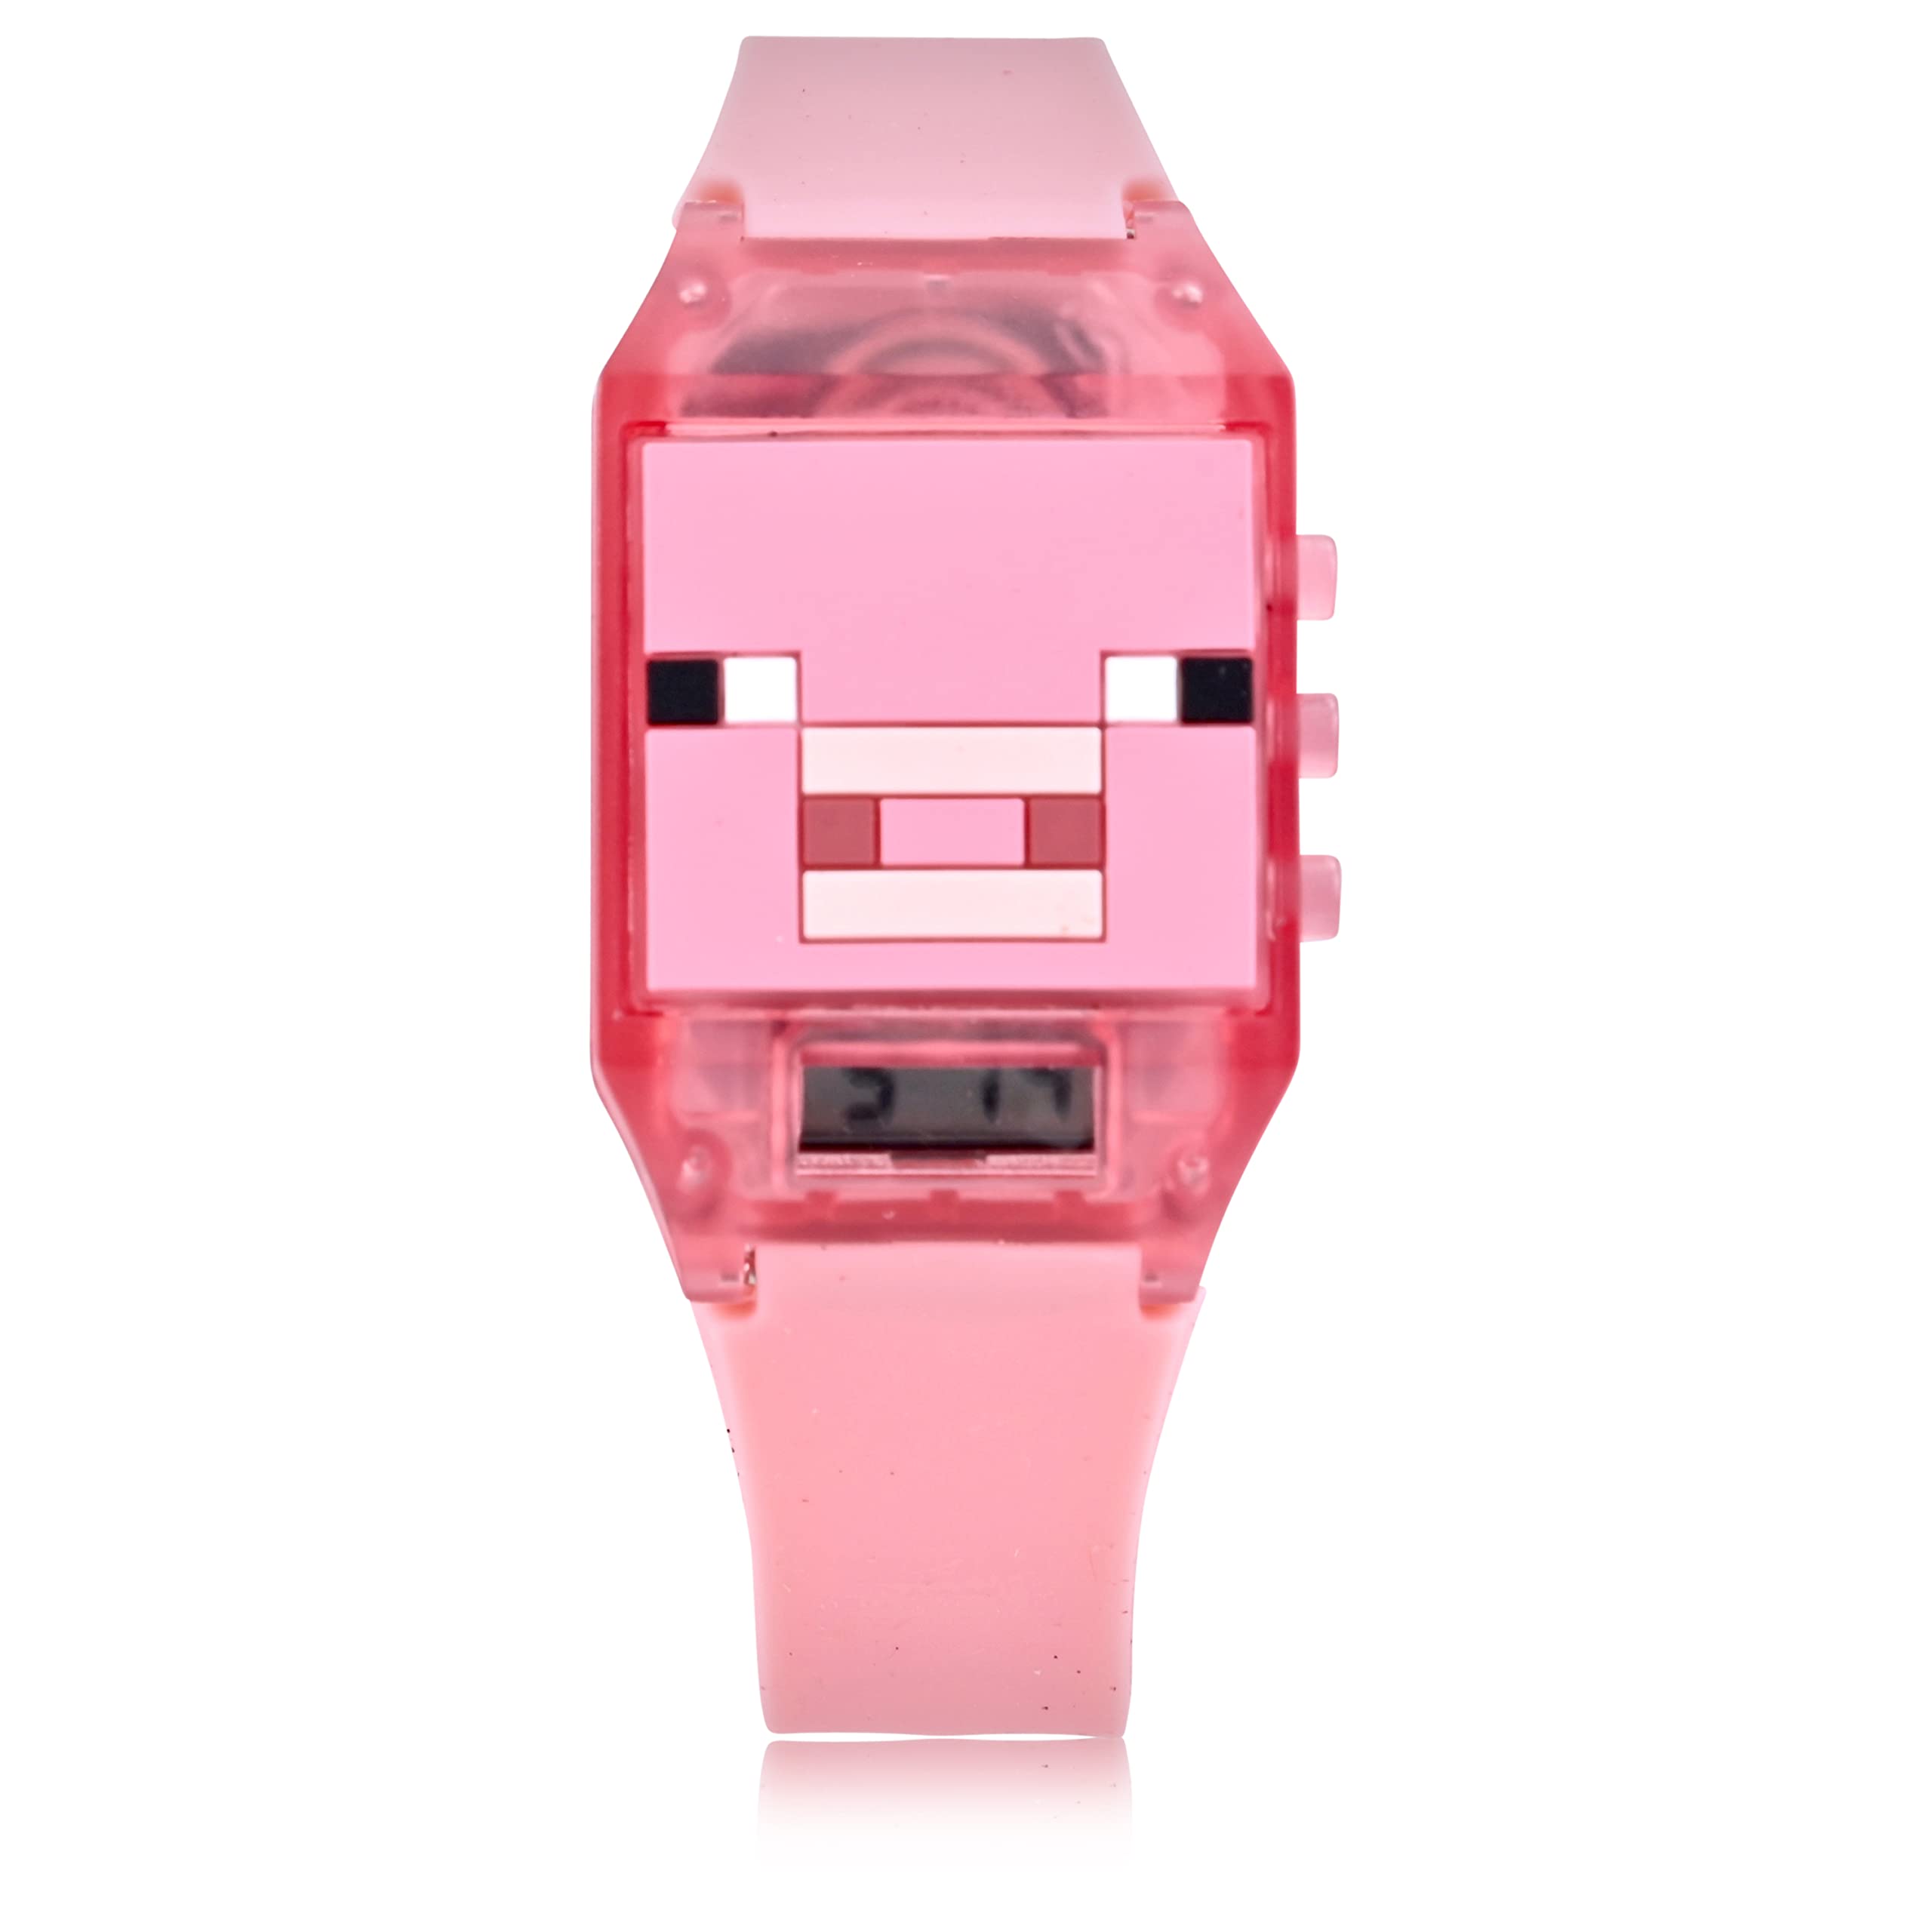 Microsoft Minecraft Kids Digital Watch - LED Flashing Light, LCD Display, Kids, Girls Watch, Silicone Strap in Pink (Model: Min4031AZ)